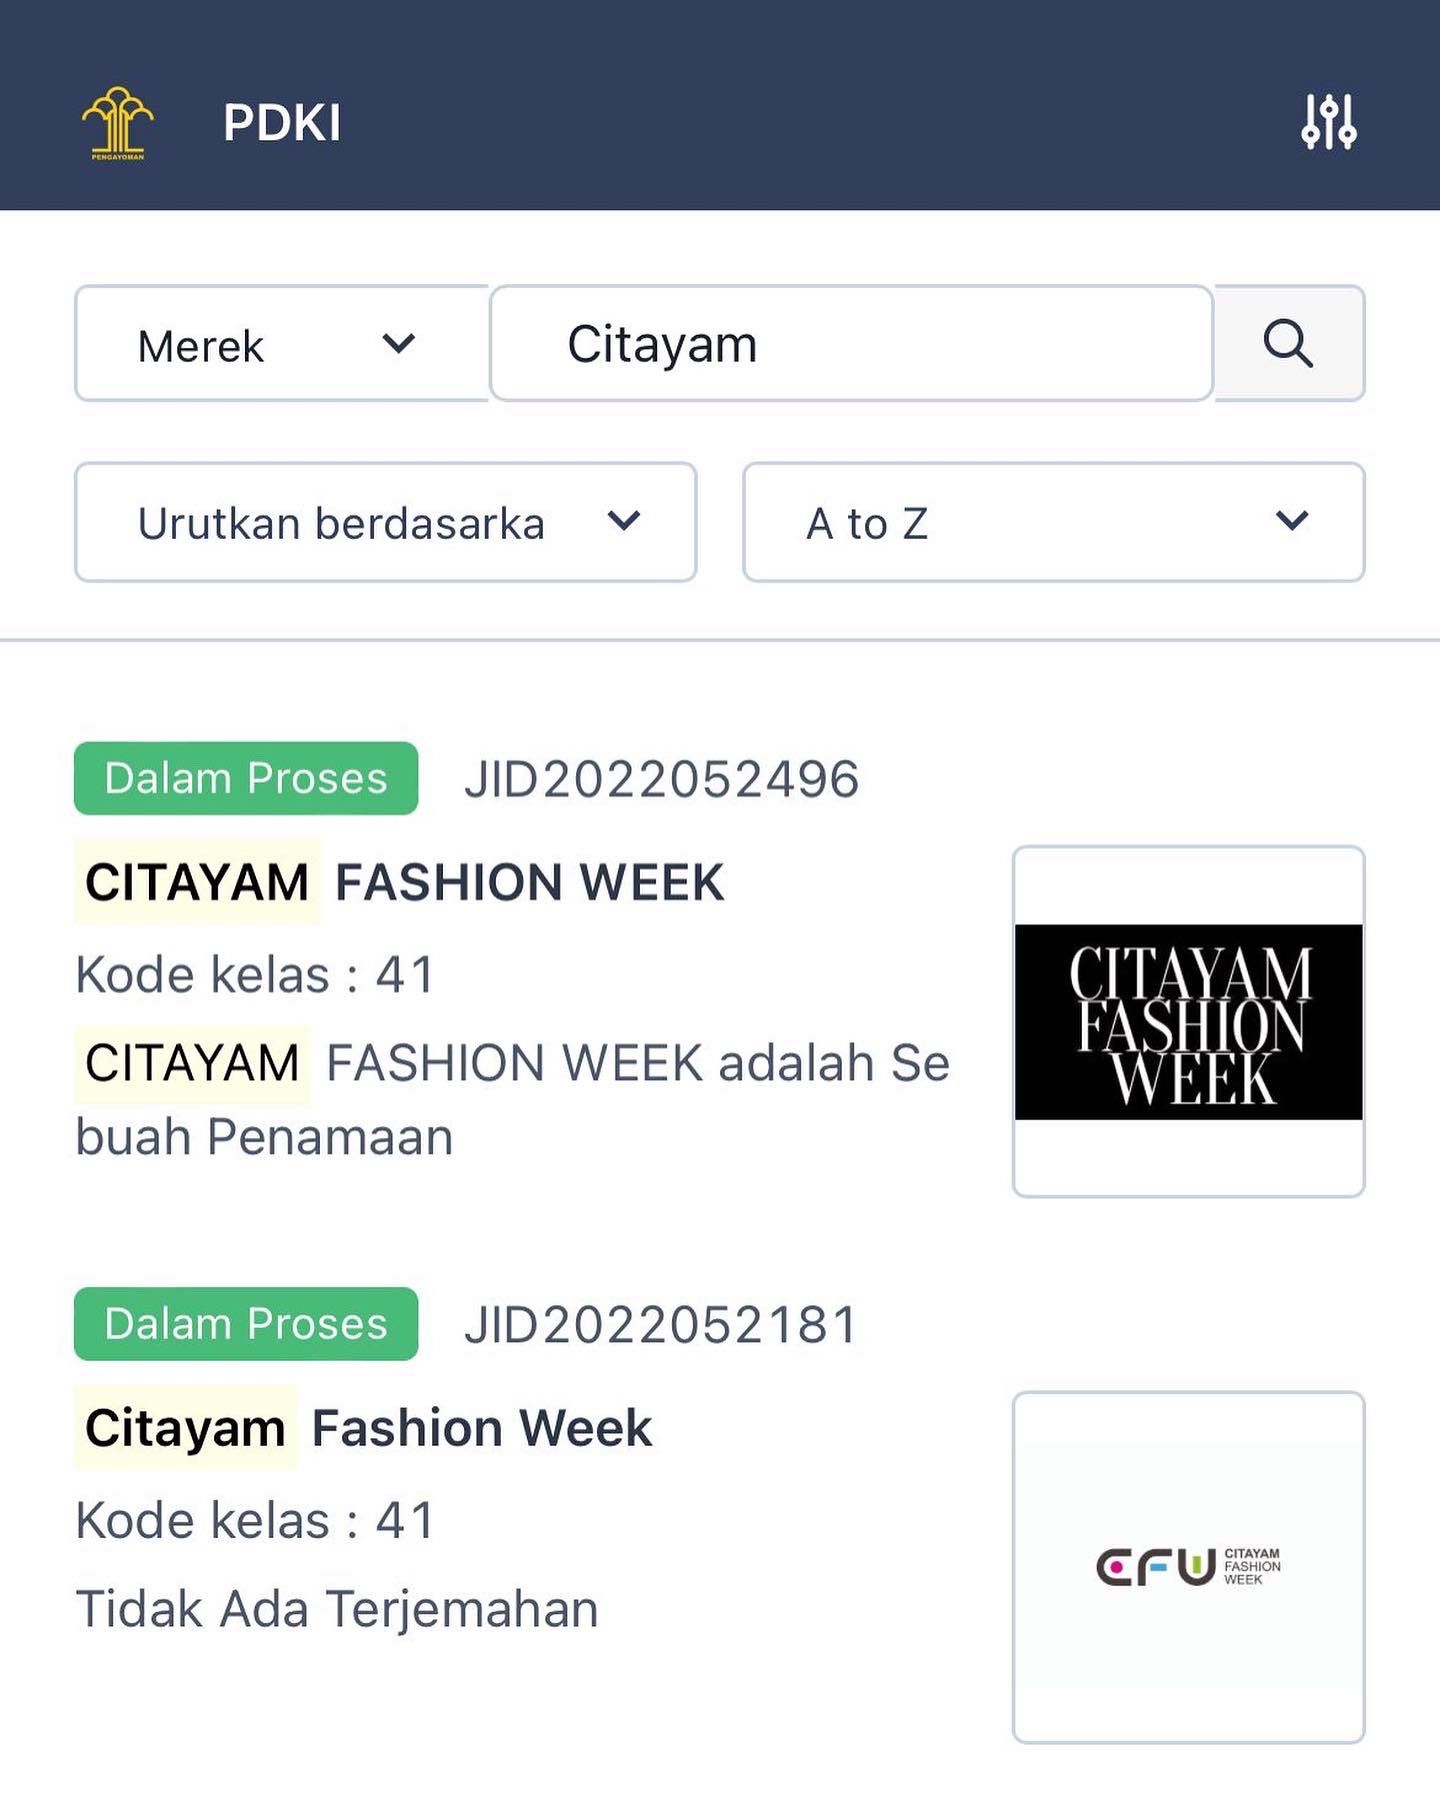 Baim Wong Banjir Kecaman Hingga Trending di Twitter, Usai Daftarkan Brand Citayam Fashion Week ke PDKI